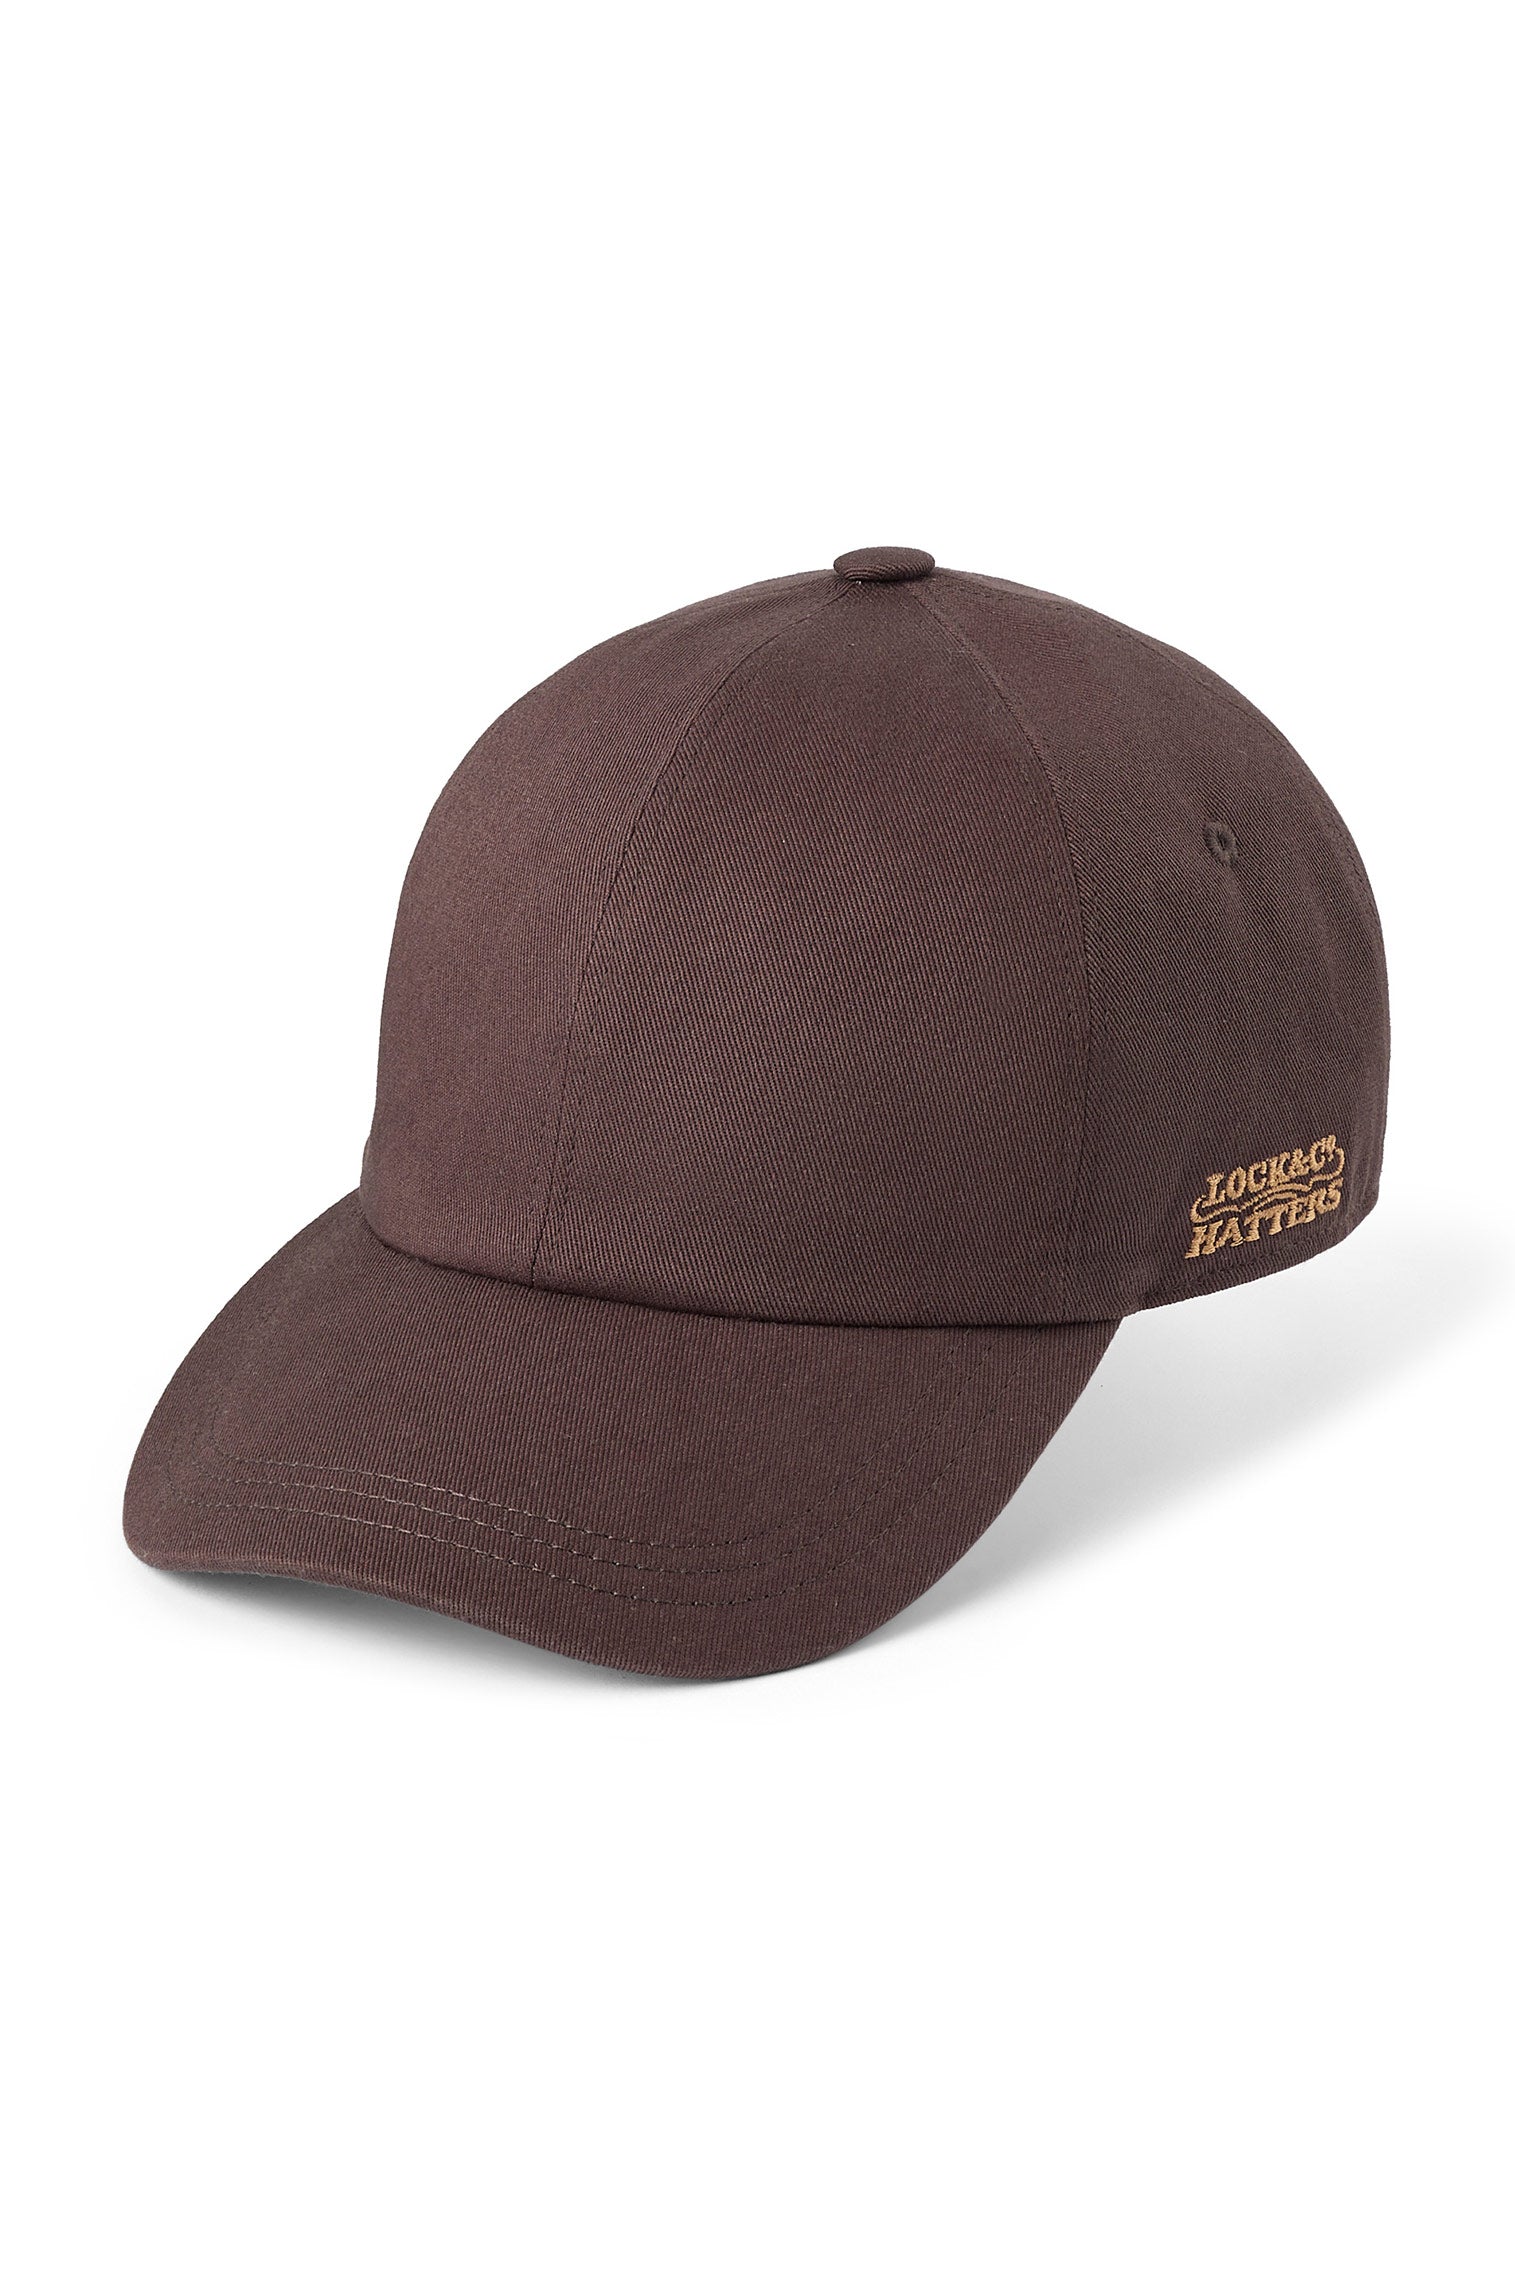 Adjustable Brown Baseball Cap - New Season Men's Hats - Lock & Co. Hatters London UK